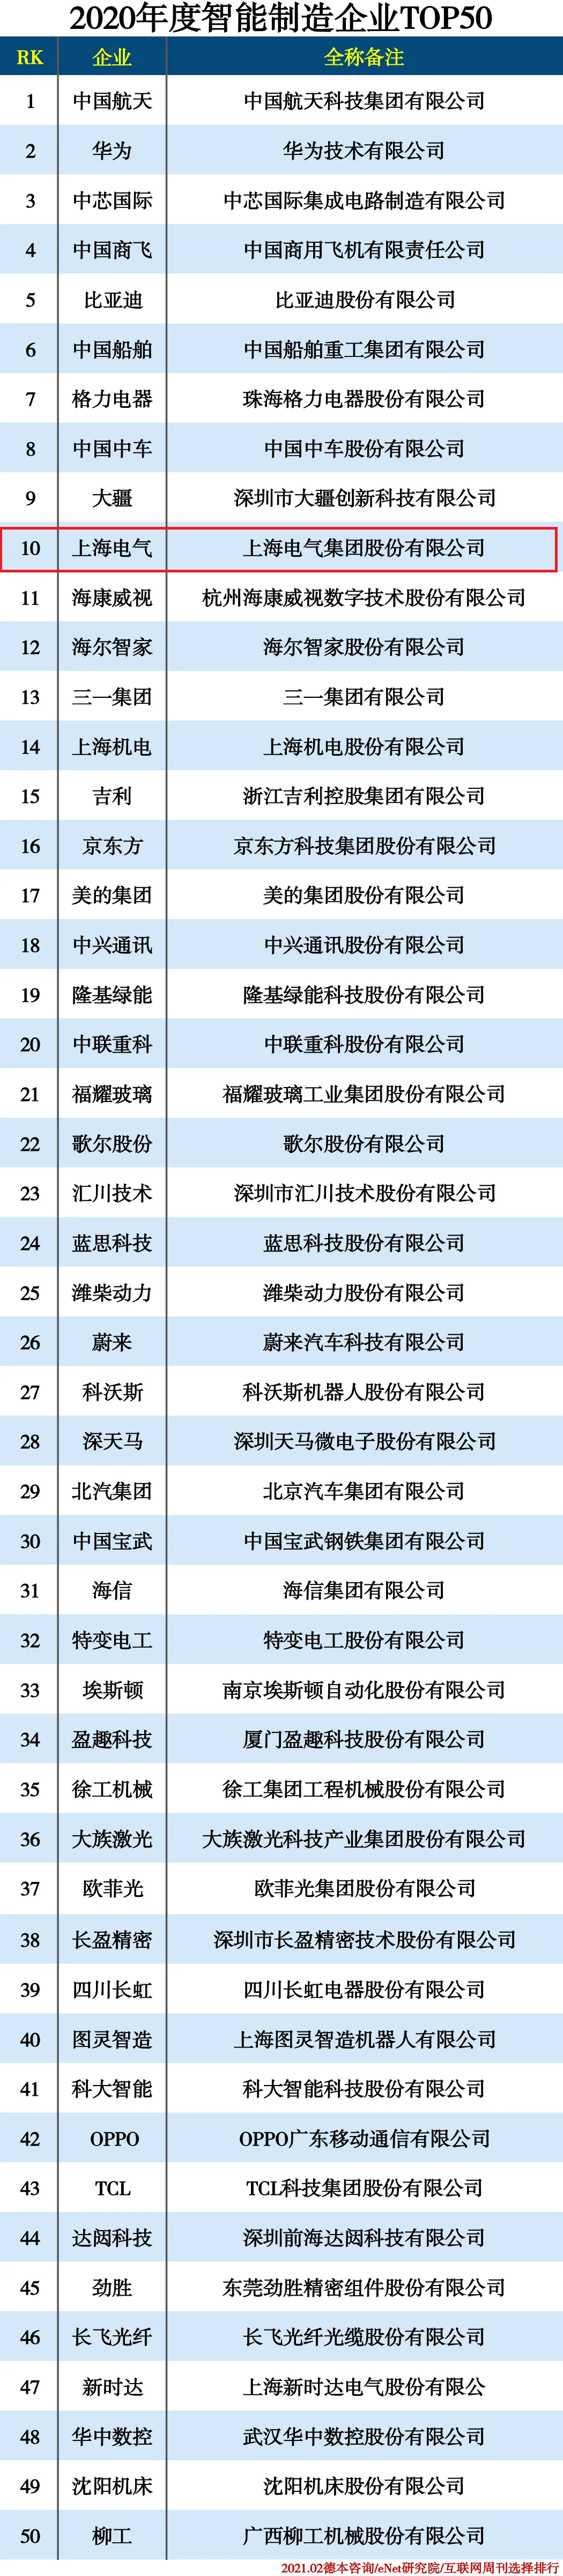 上海电气 | 智能制造 TOP10！